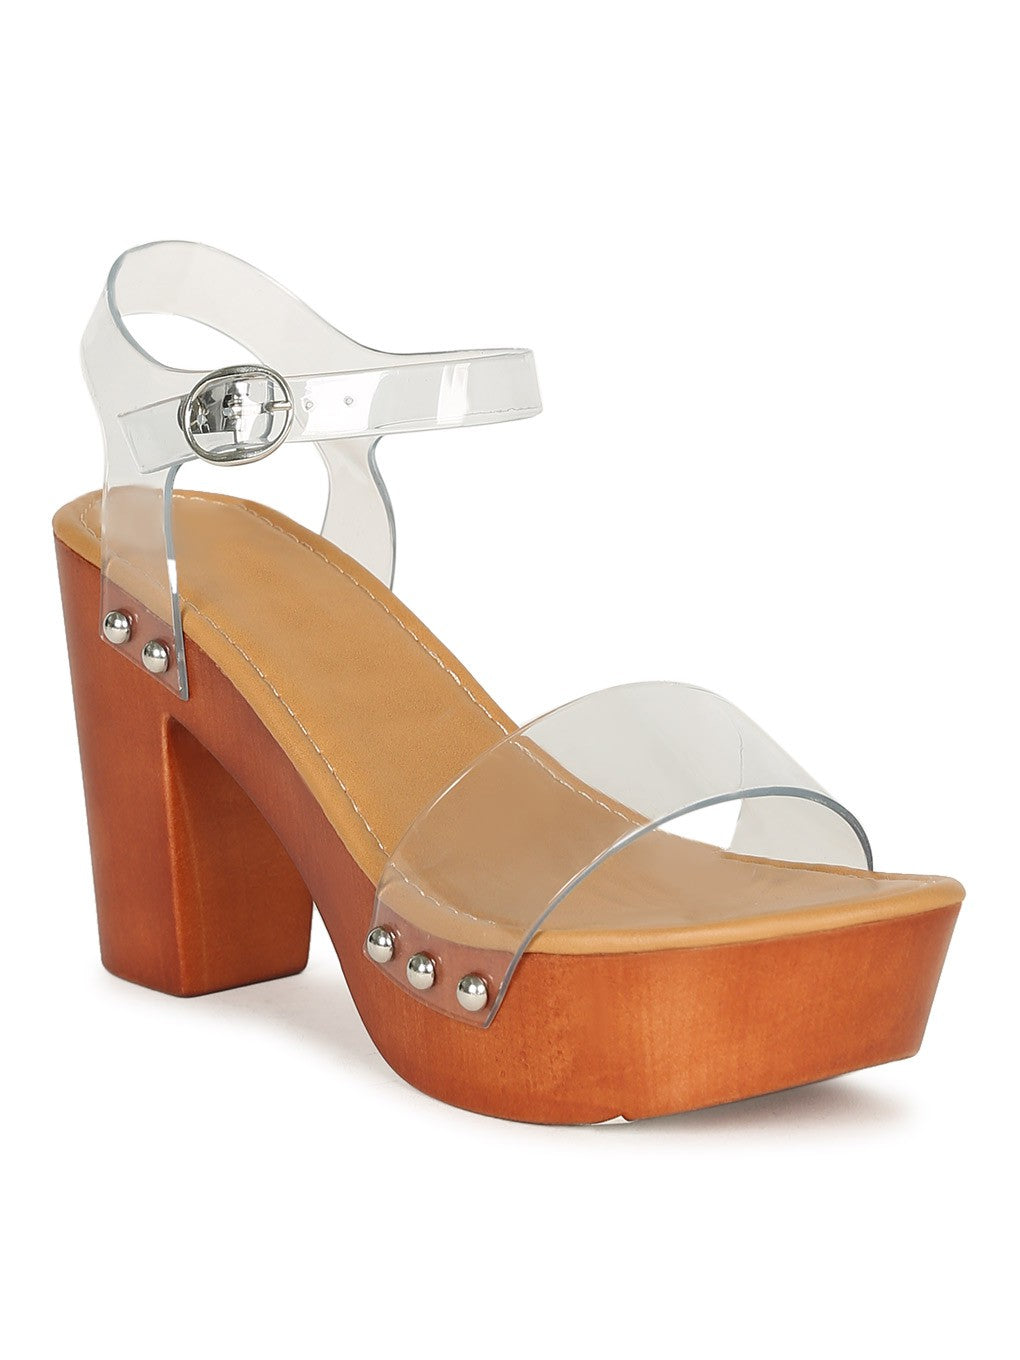 Faux Wood Platform Clear Chunky Heel Sandal Shoe